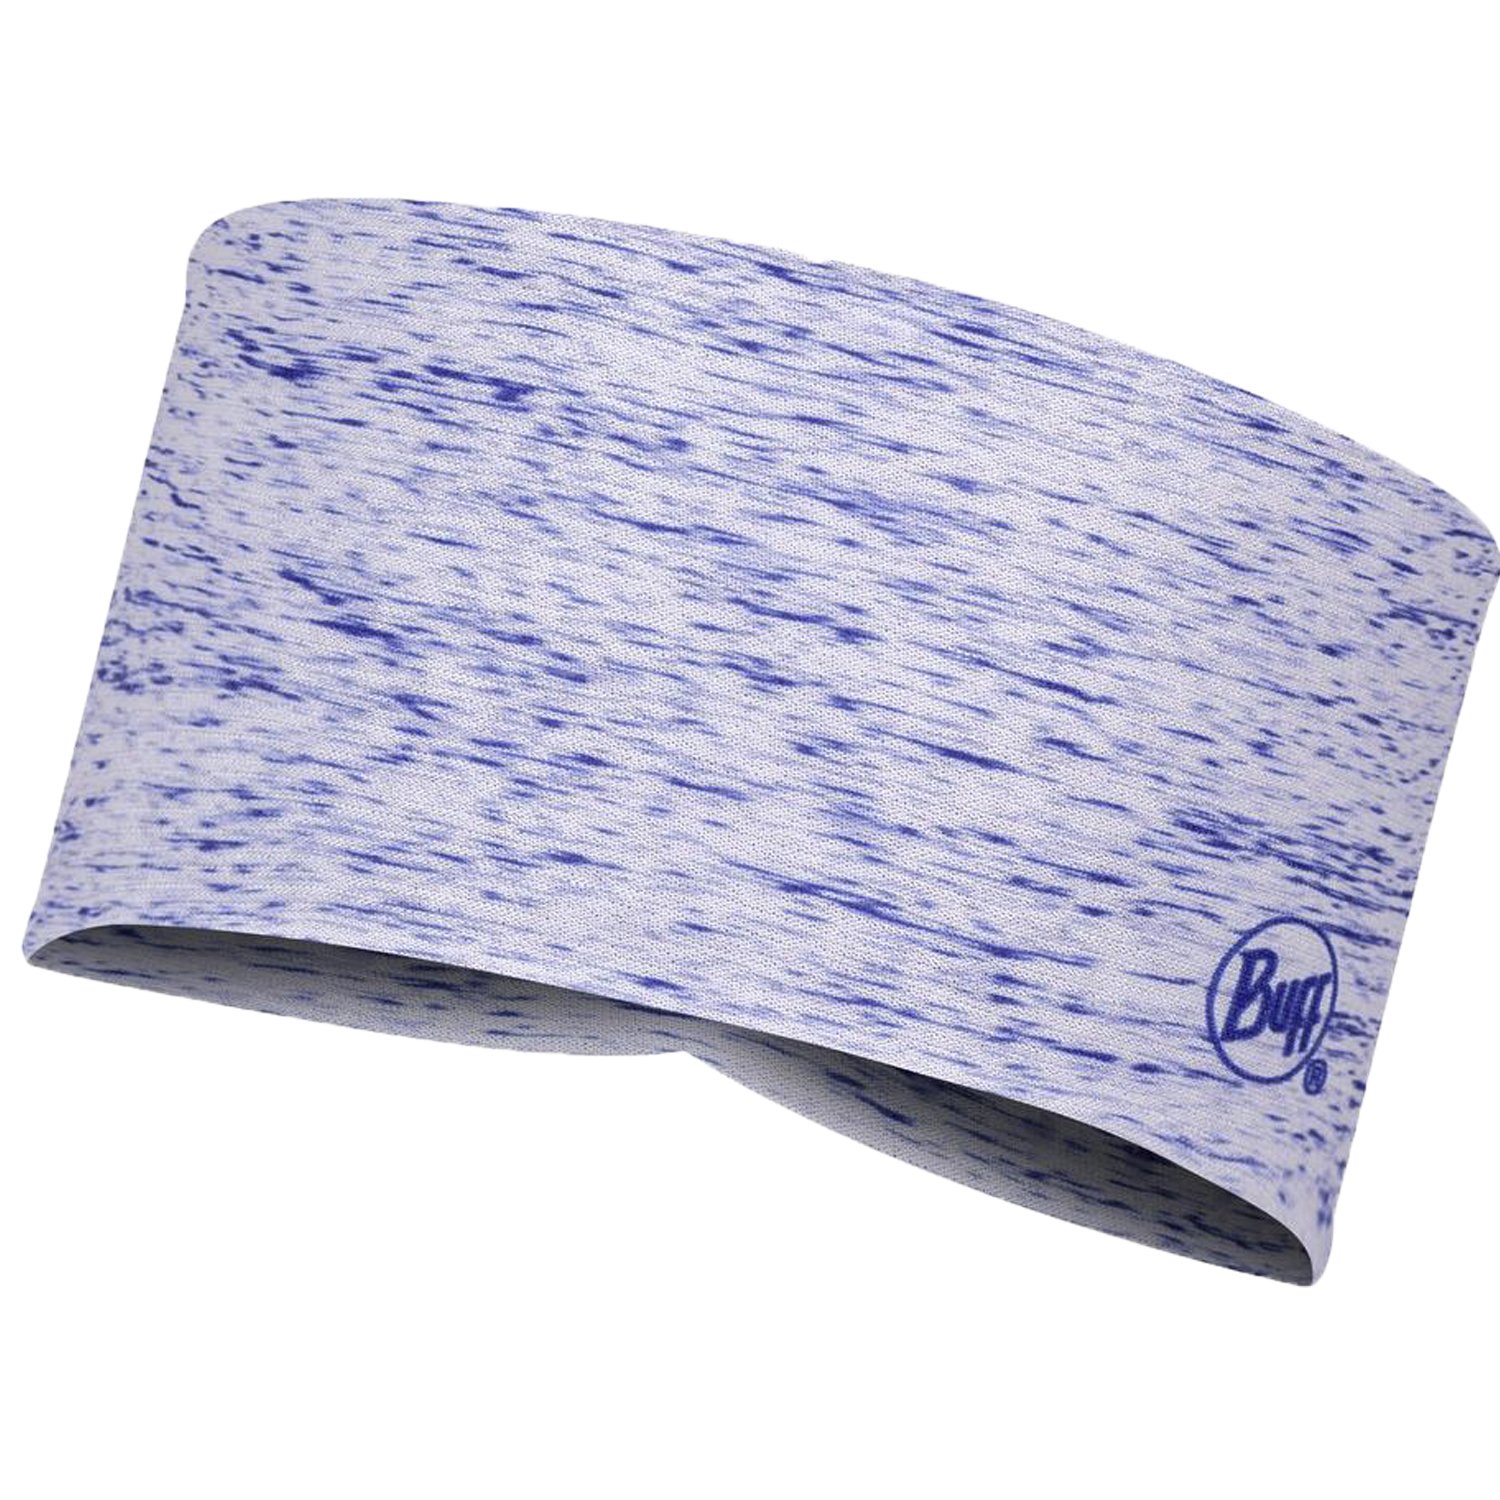 Повязка Buff CoolNet UV+ Ellipse Headband Lavender Blue Htr, 122725.728.10.00 повязка buff coolnet uv ellipse headband lavender blue htr 122725 728 10 00